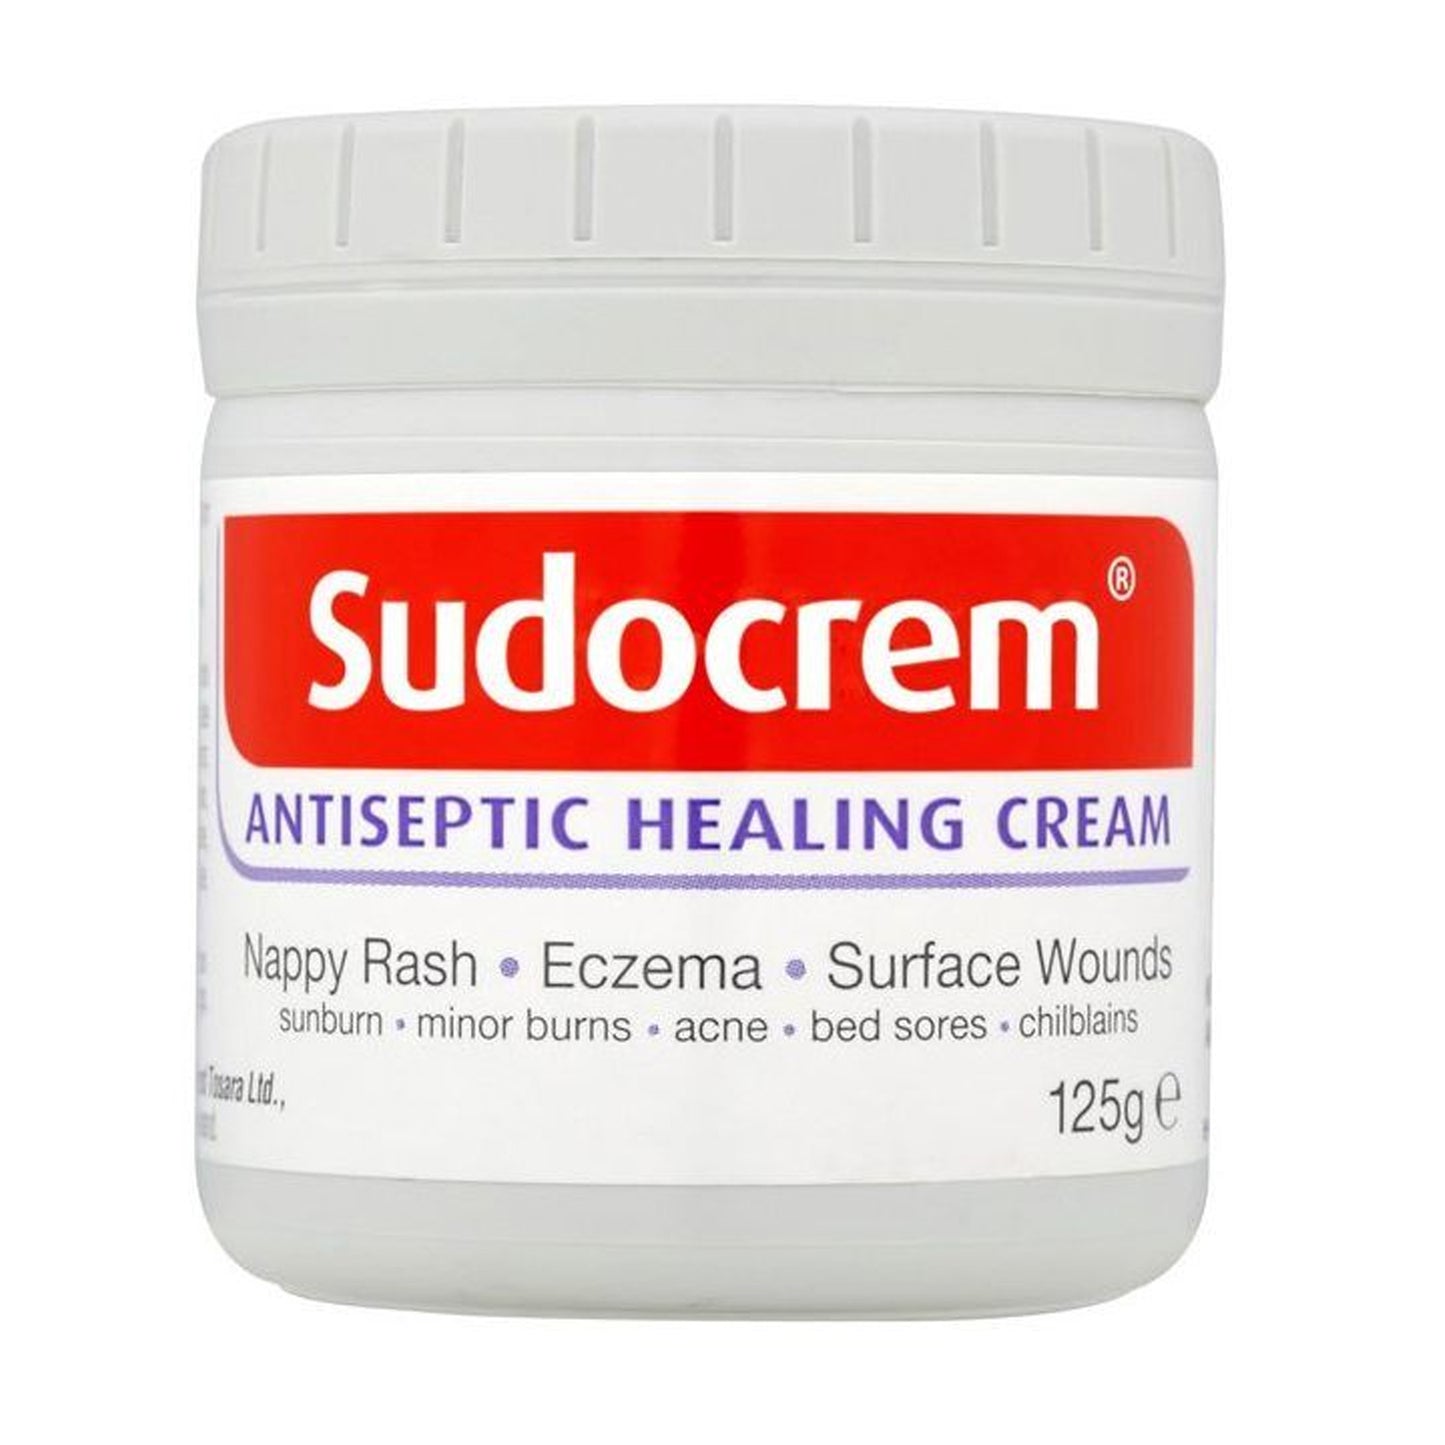 SUDOCREM - ANTISEPTIC HEALING CREAM - 125G